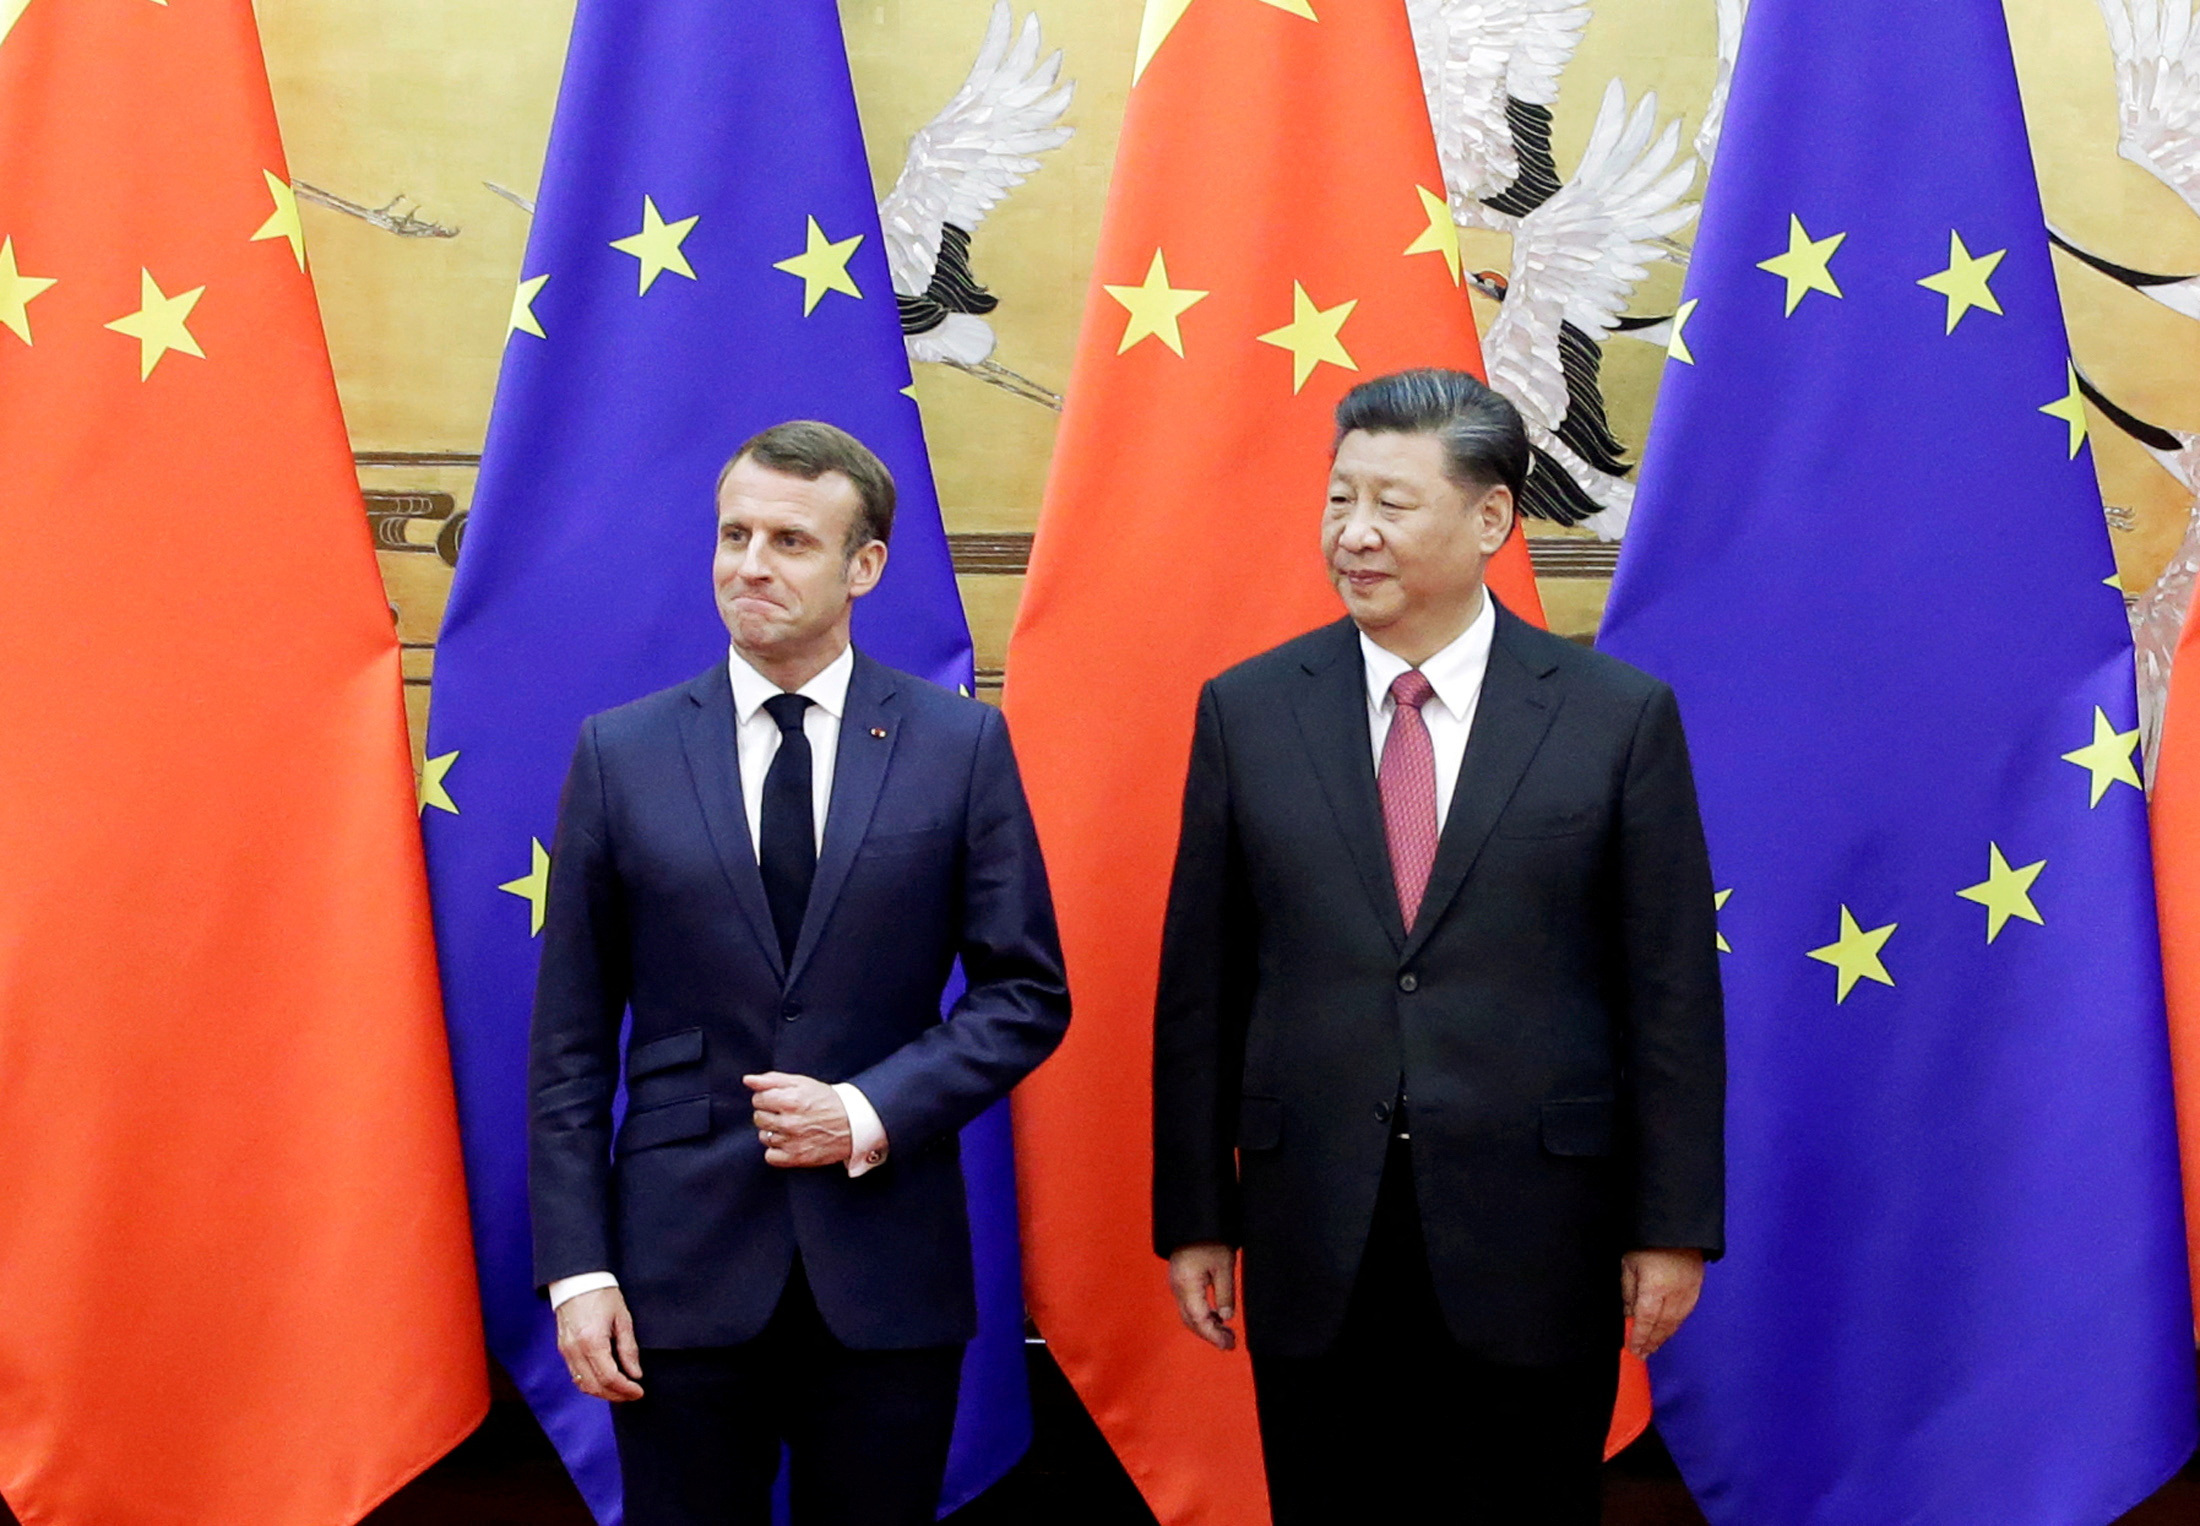 France's Macron set to press China's Xi on trade, Ukraine | Reuters